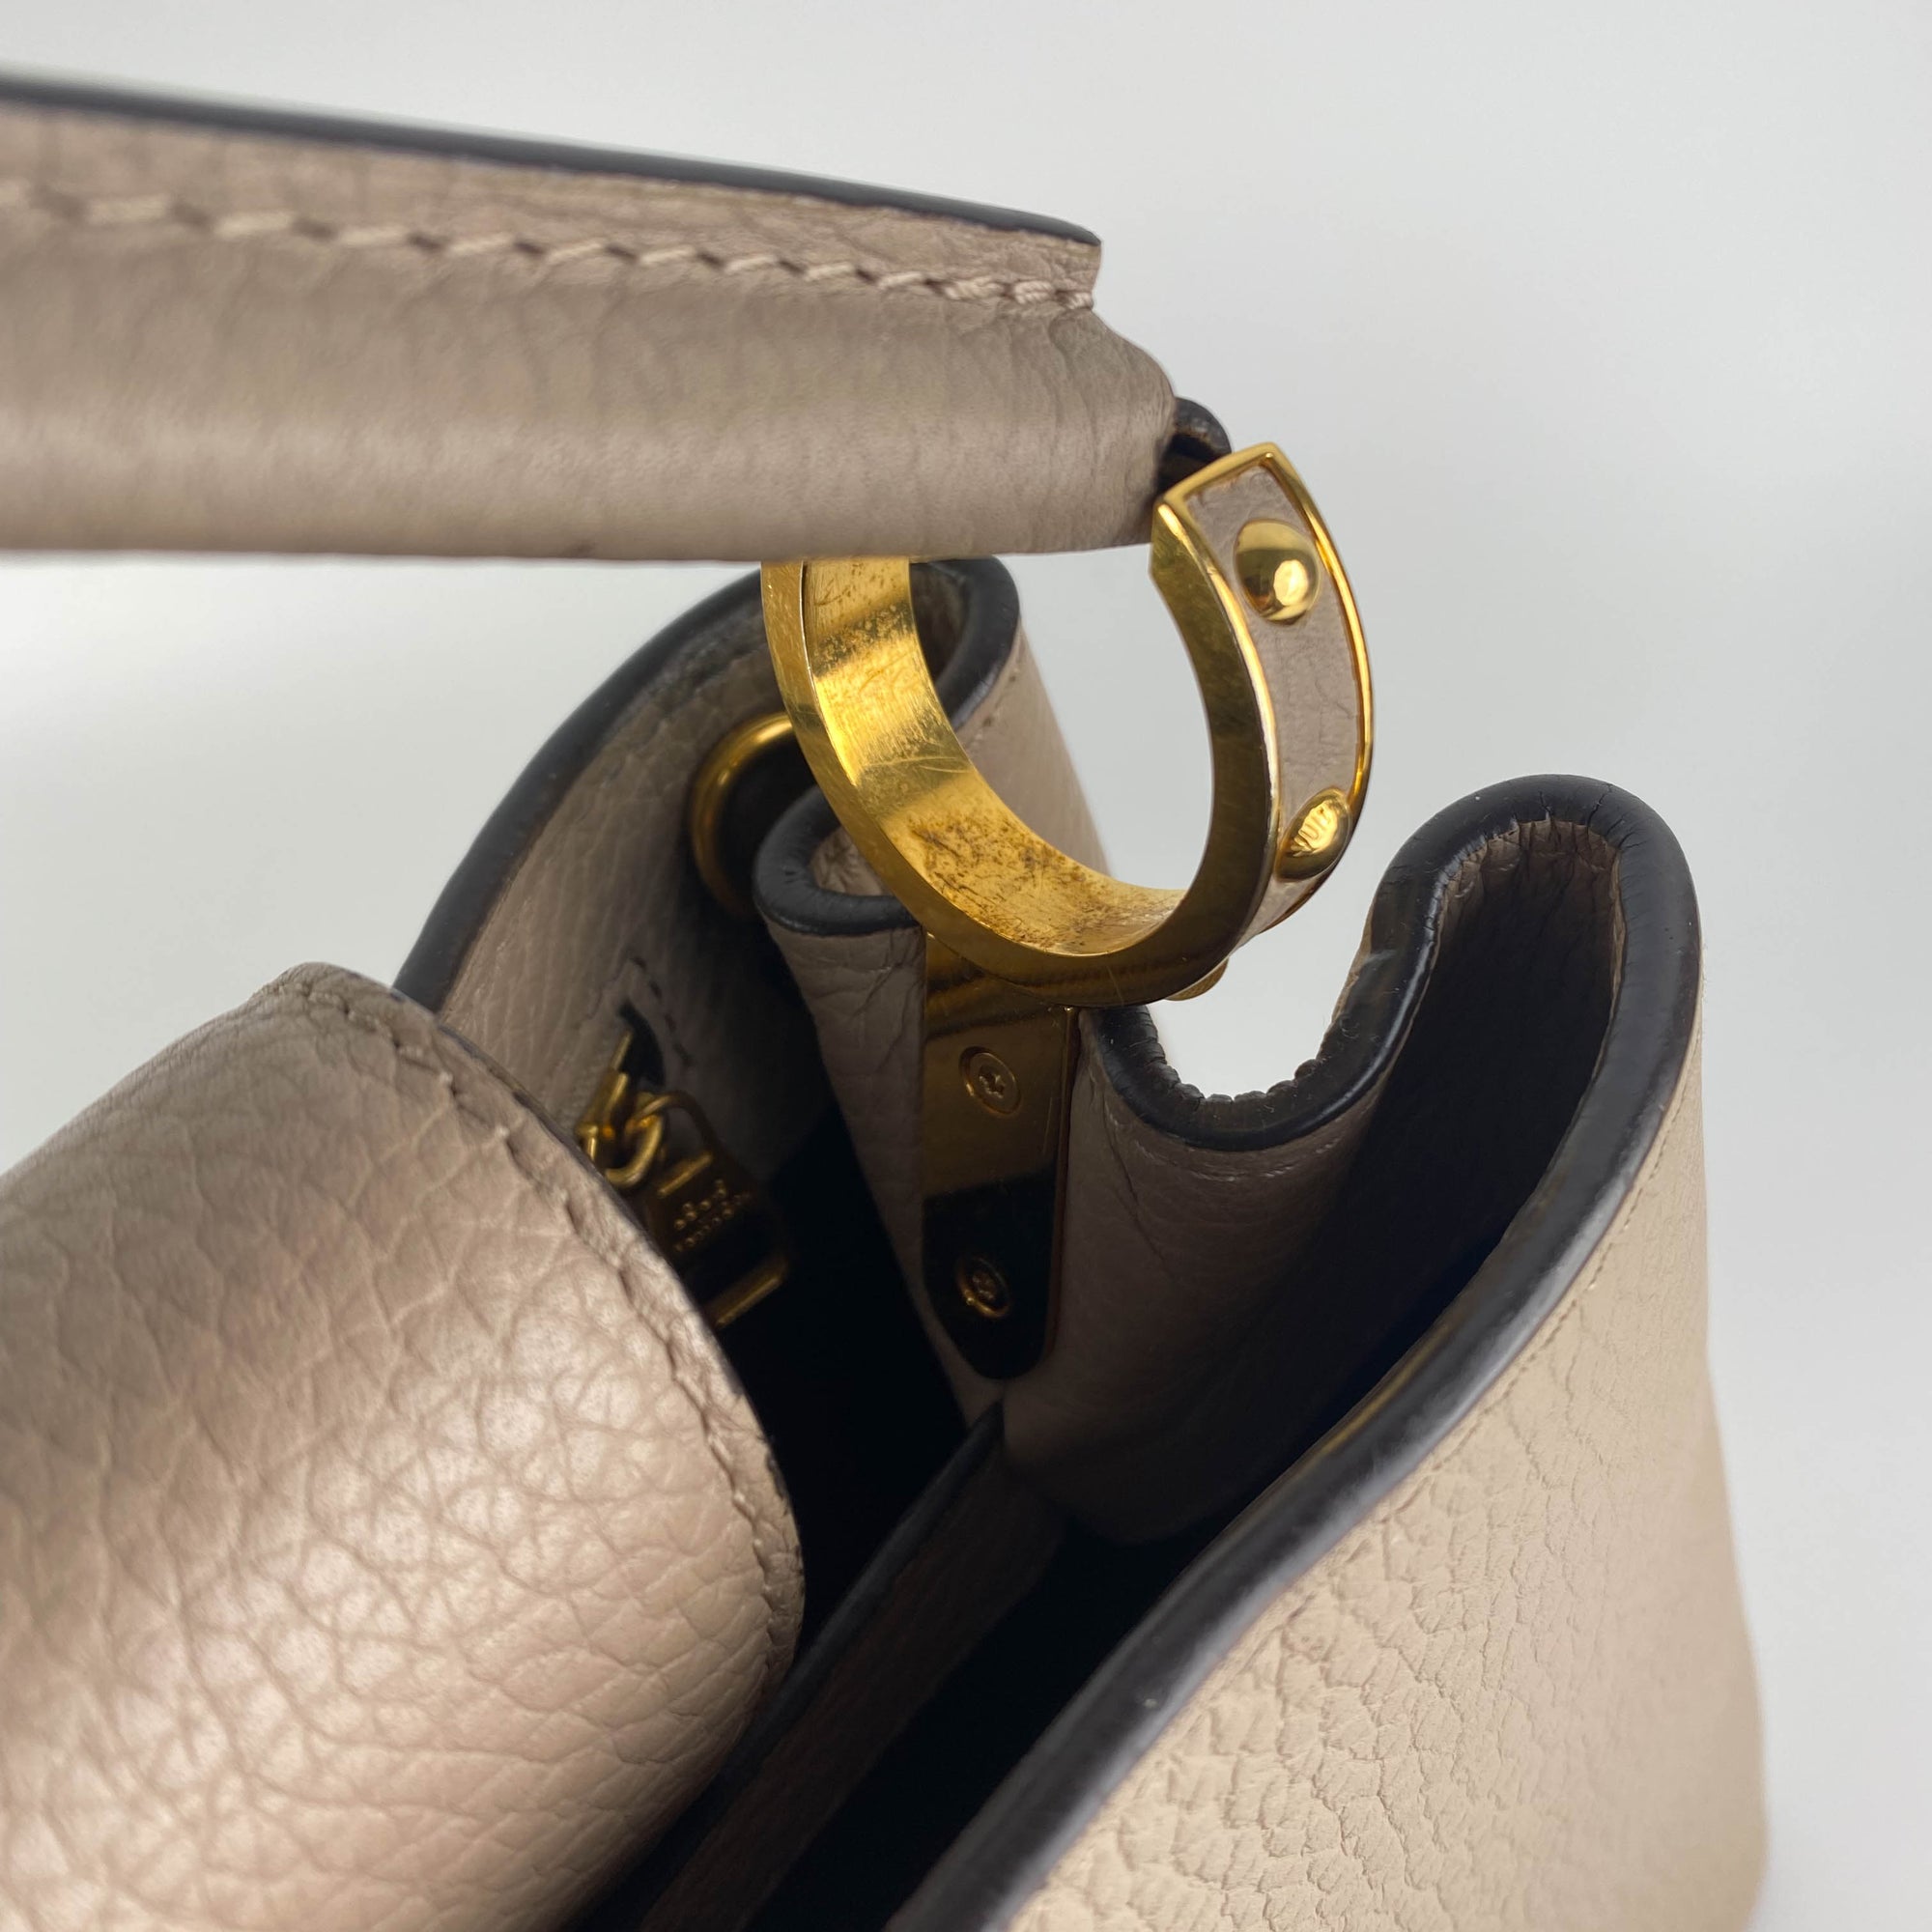 Shop Louis Vuitton Capucines mm (M59209) by lifeisfun